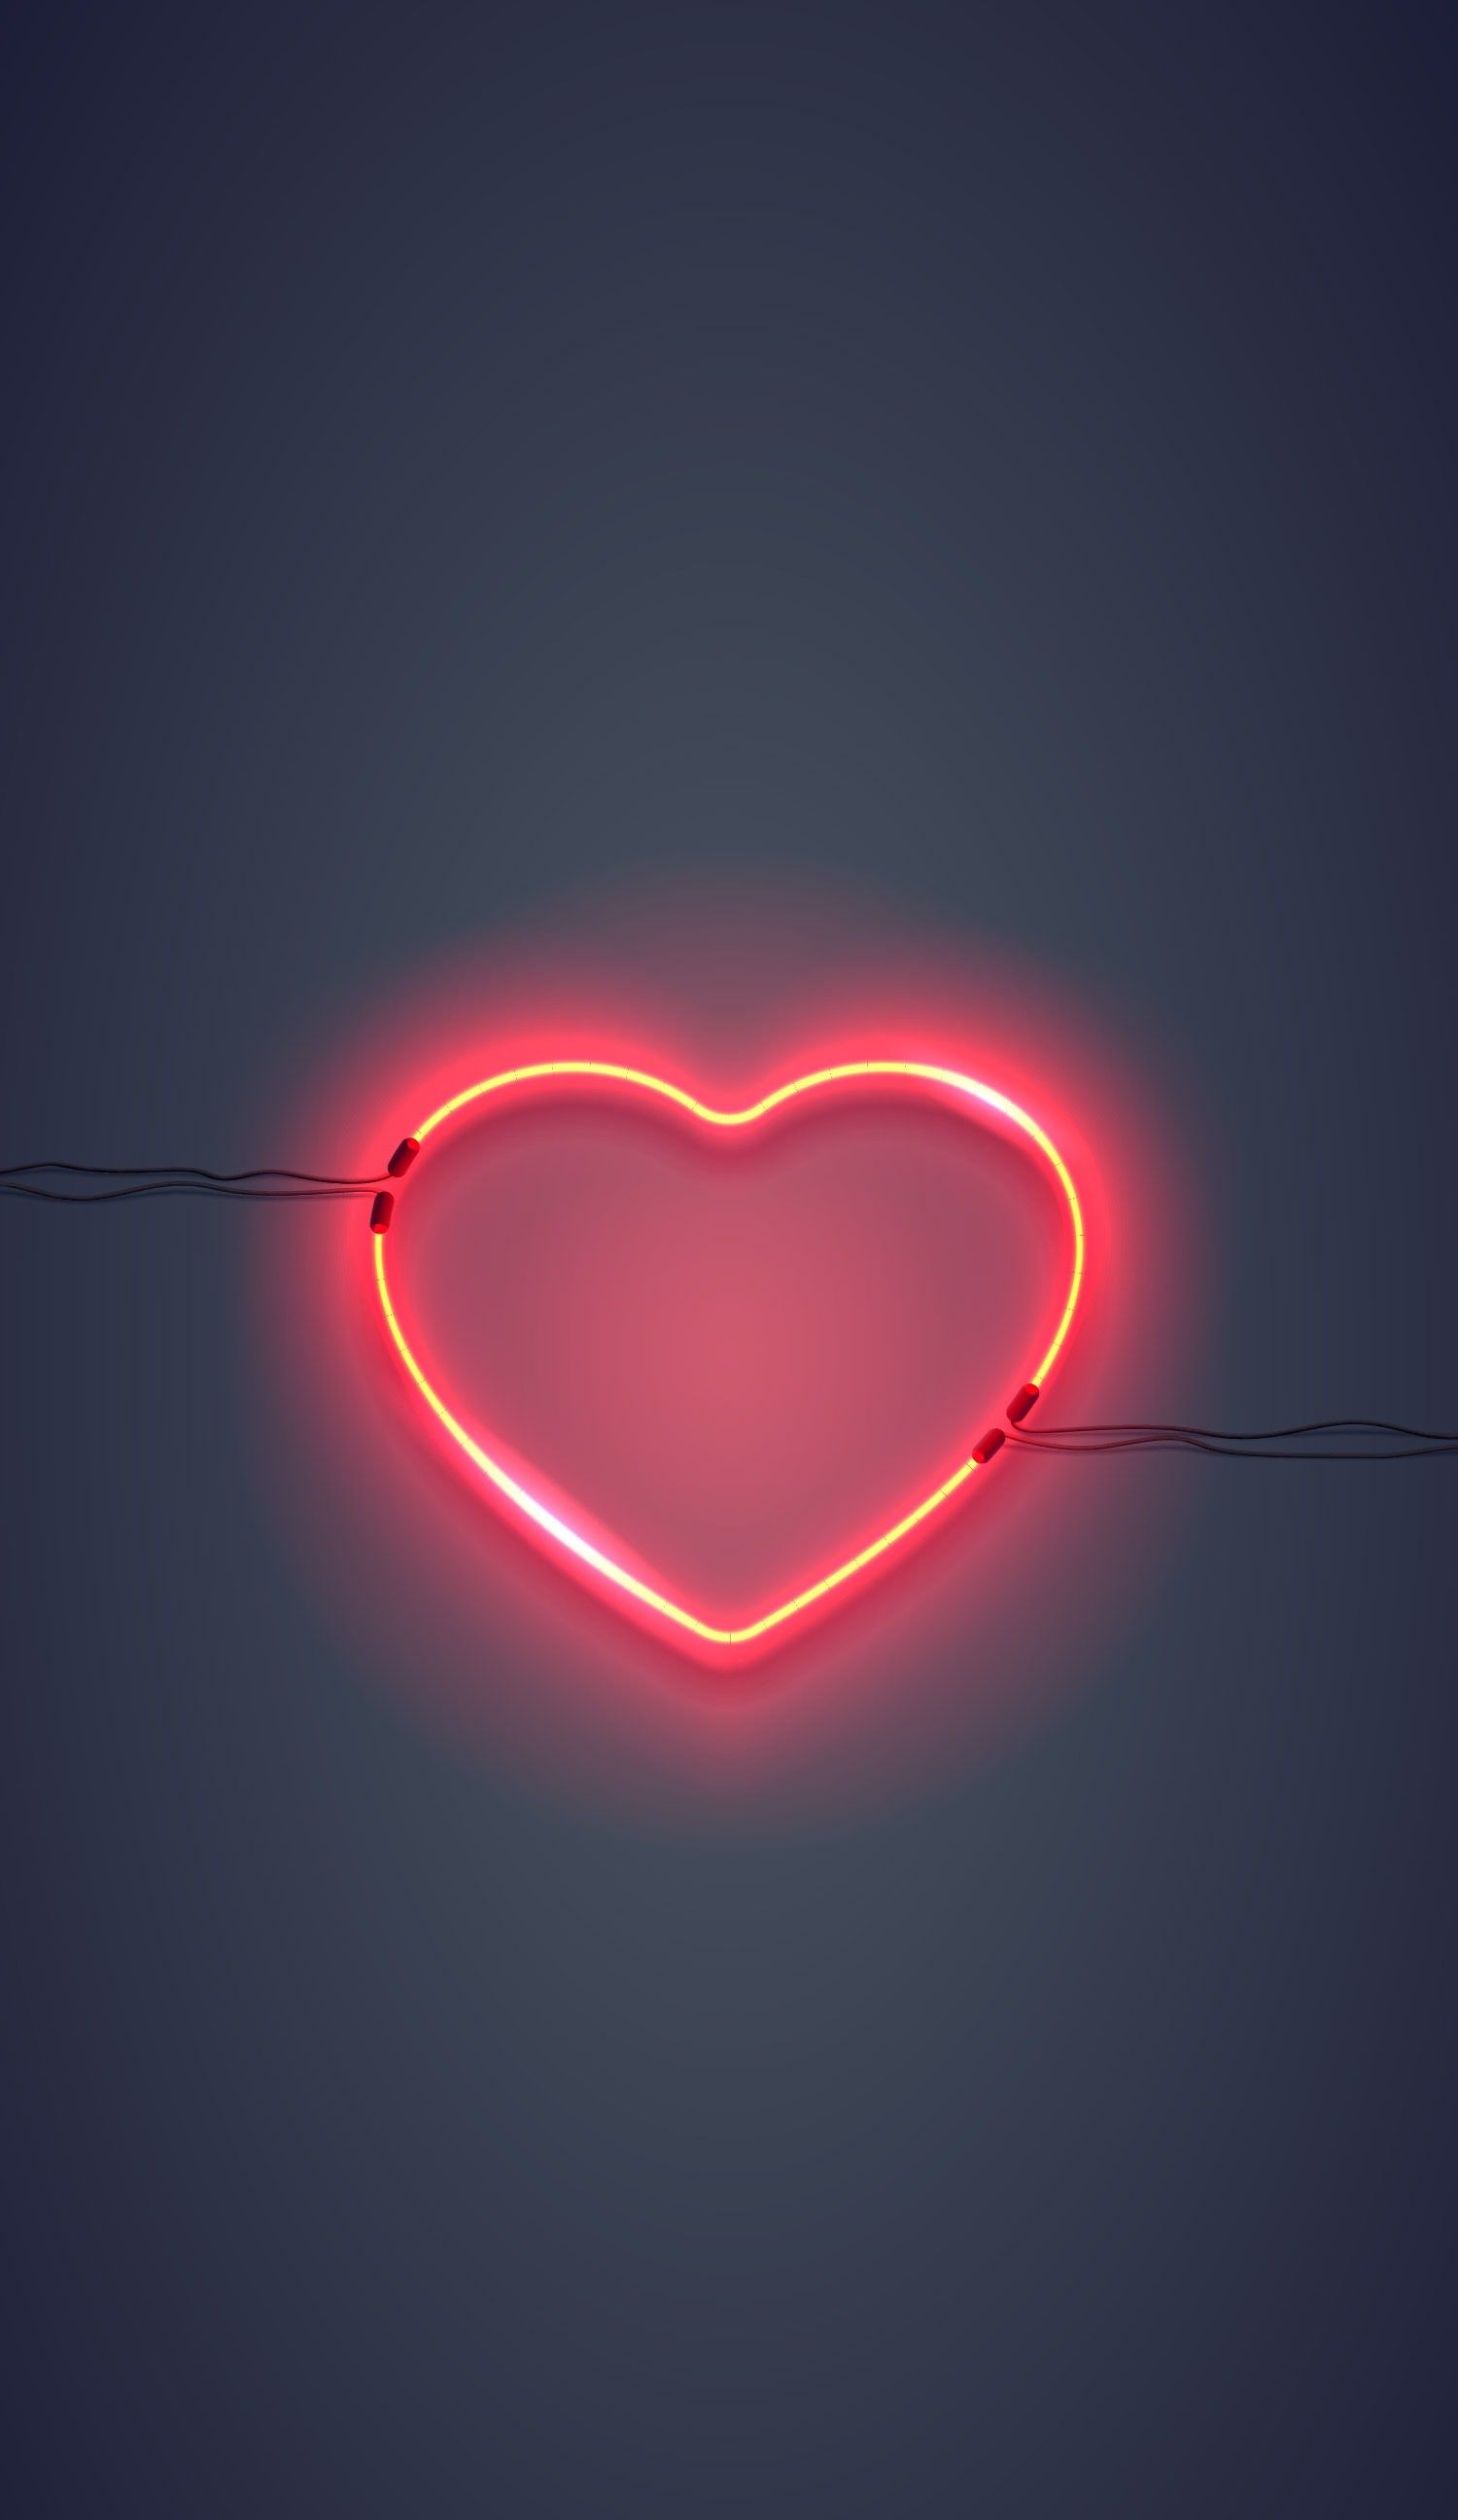 Cutest little red heart neon sign. Neon wallpaper, Heart wallpaper, Android wallpaper